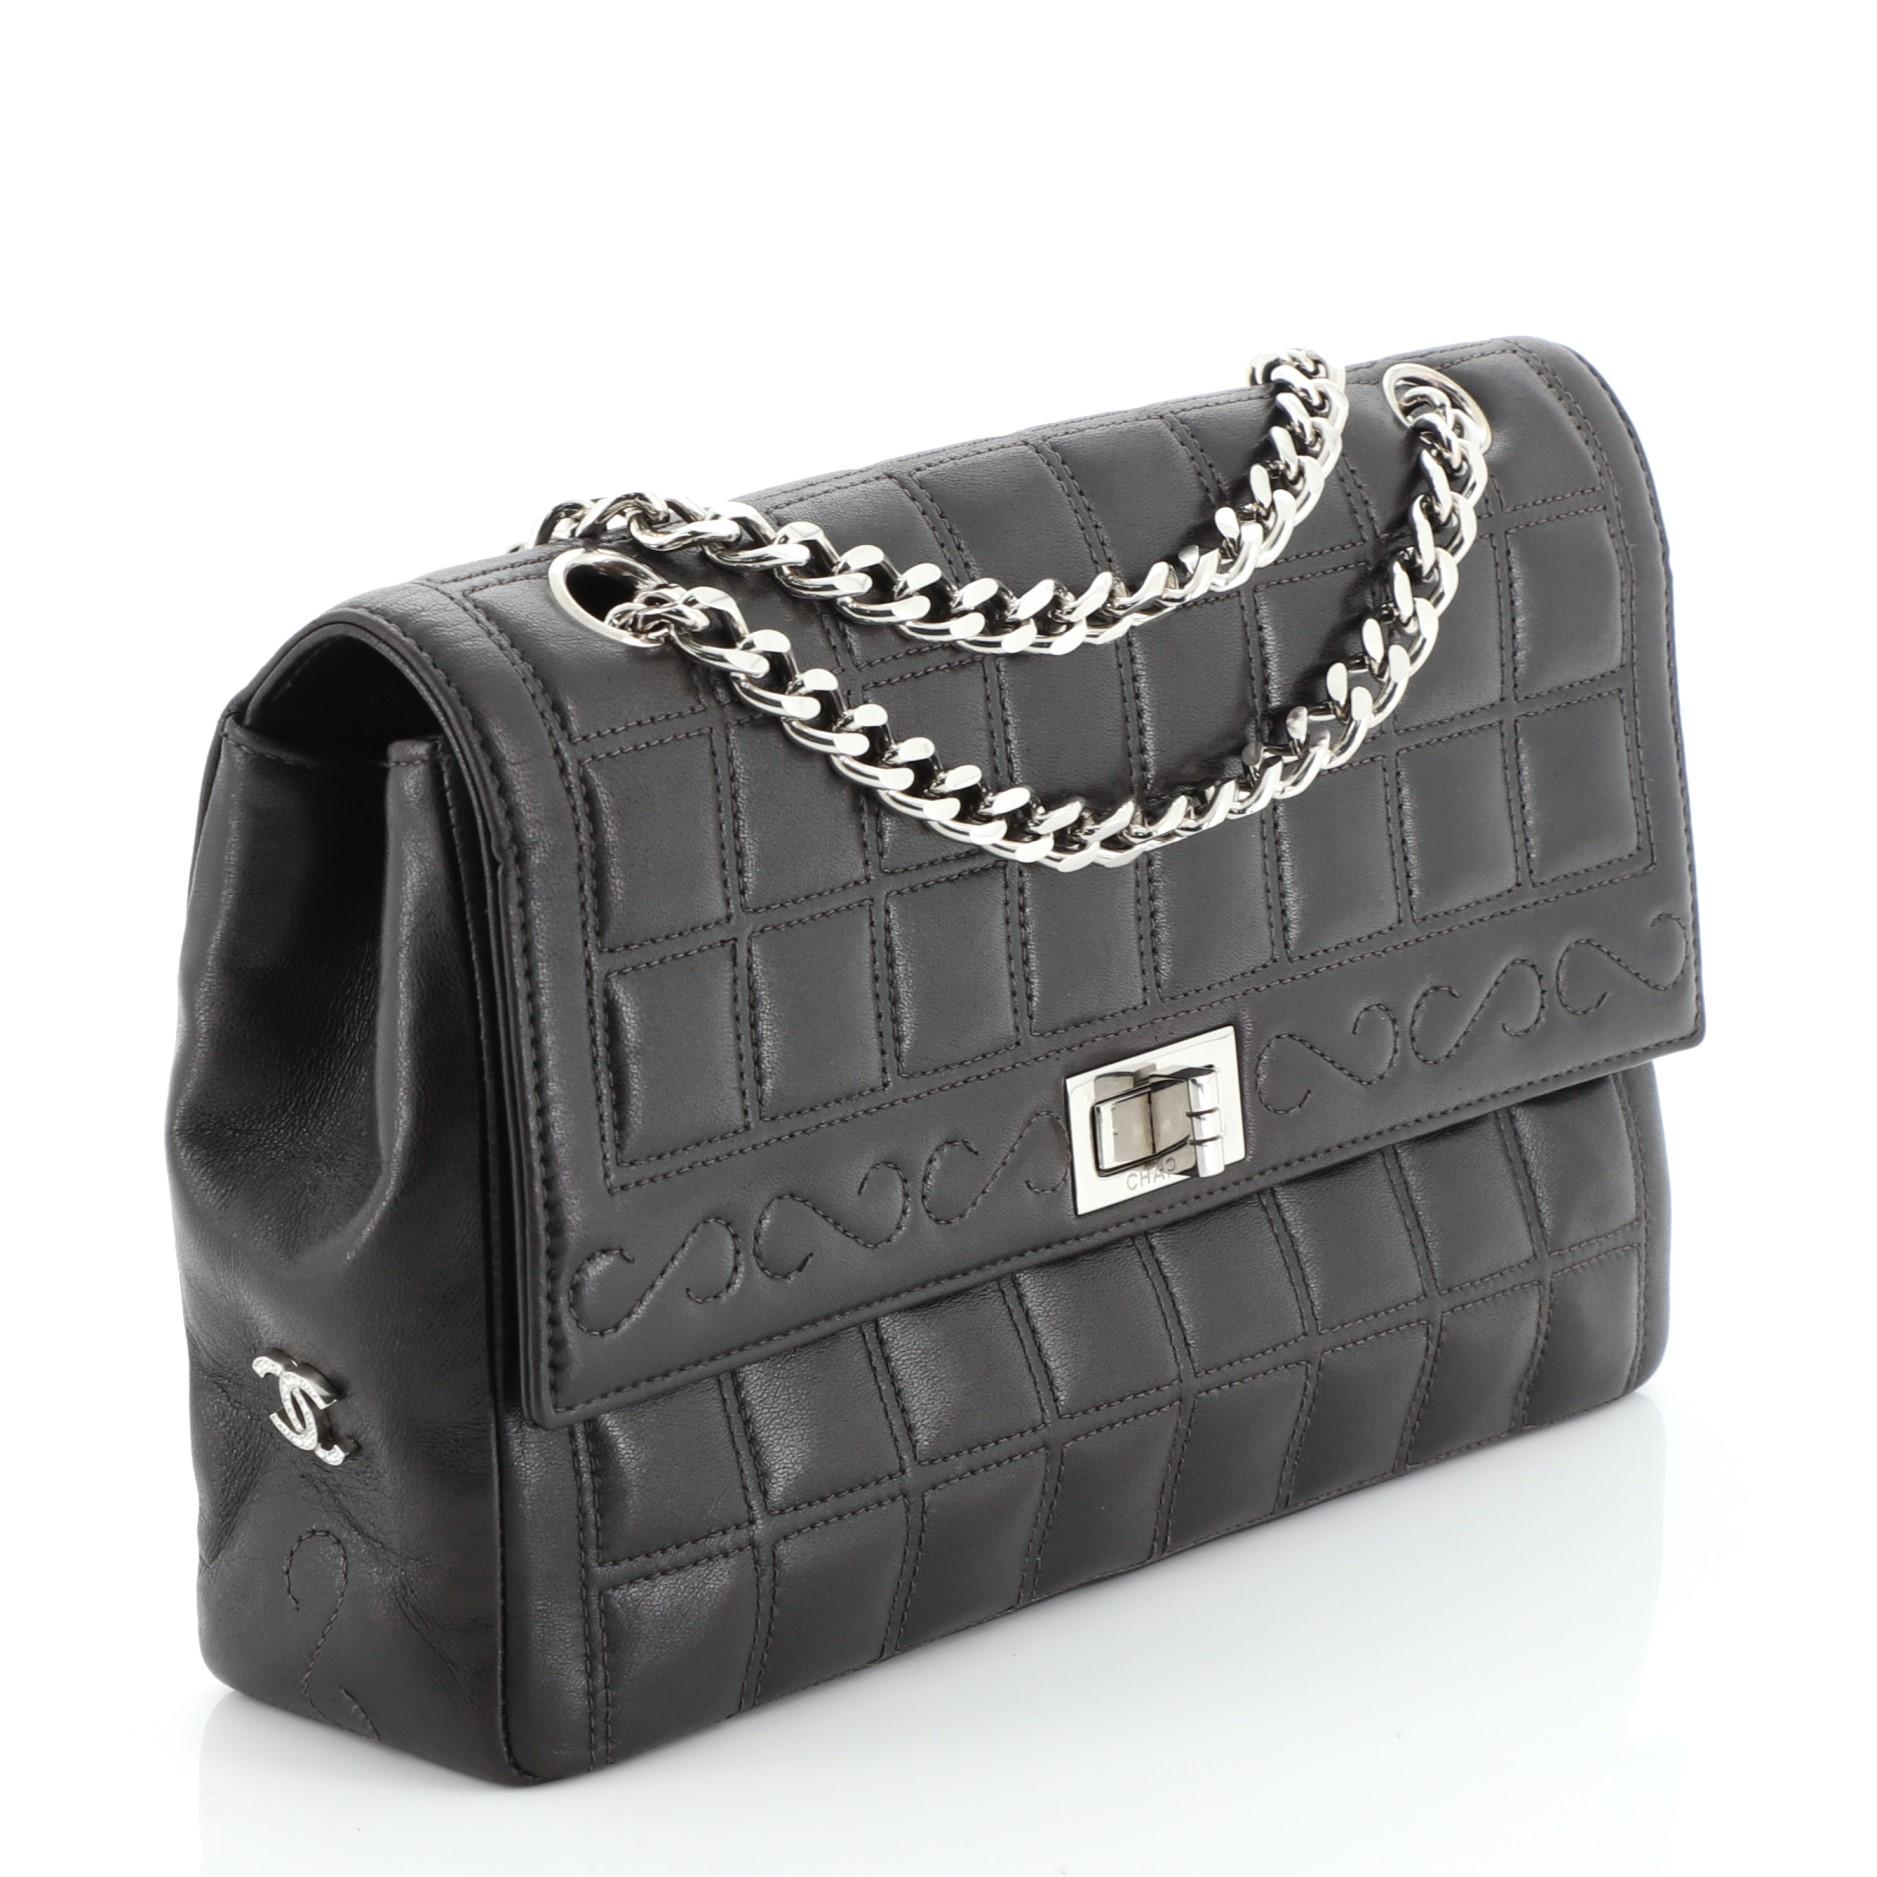 Black Chanel Vintage Chocolate Bar Mademoiselle Chain Flap Bag